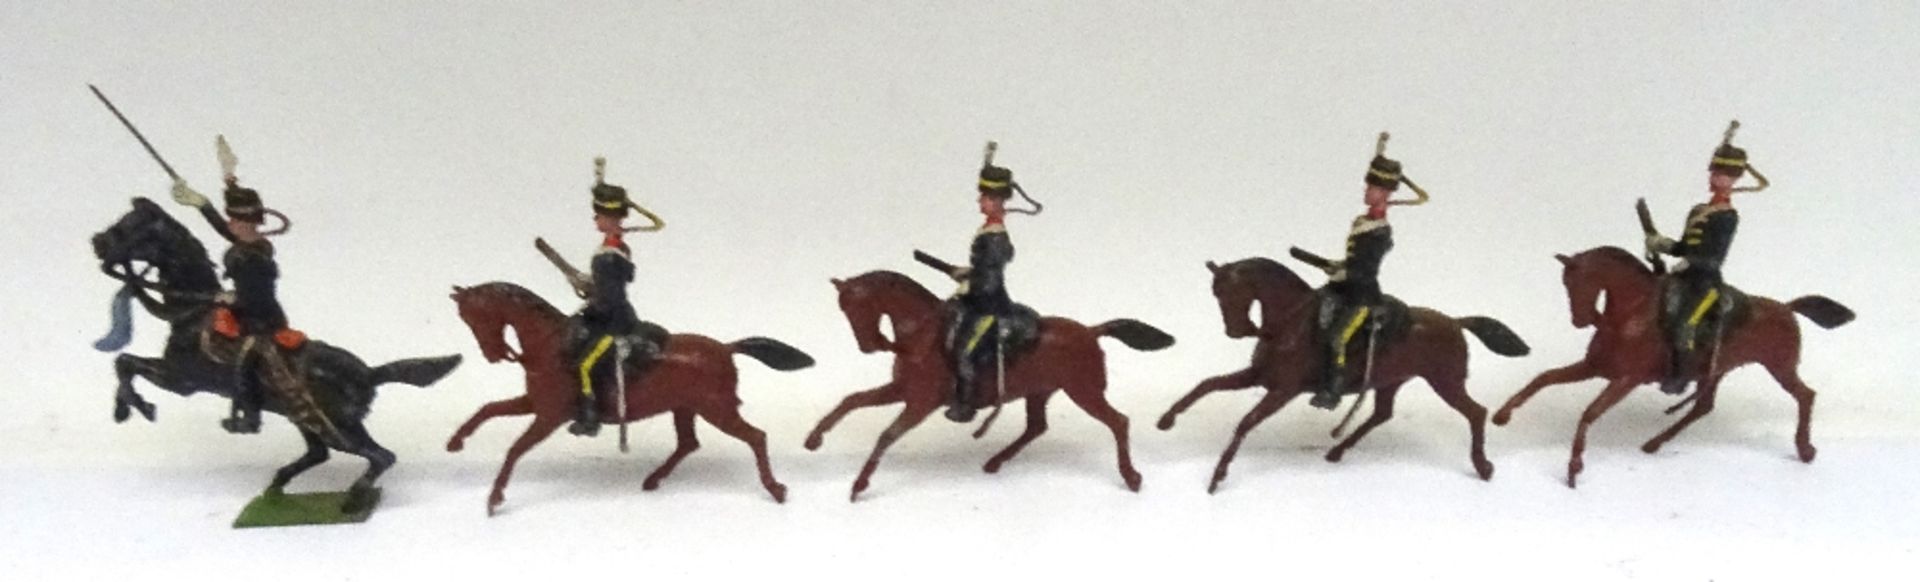 Britains set 13, 3rd Hussars - Image 4 of 6